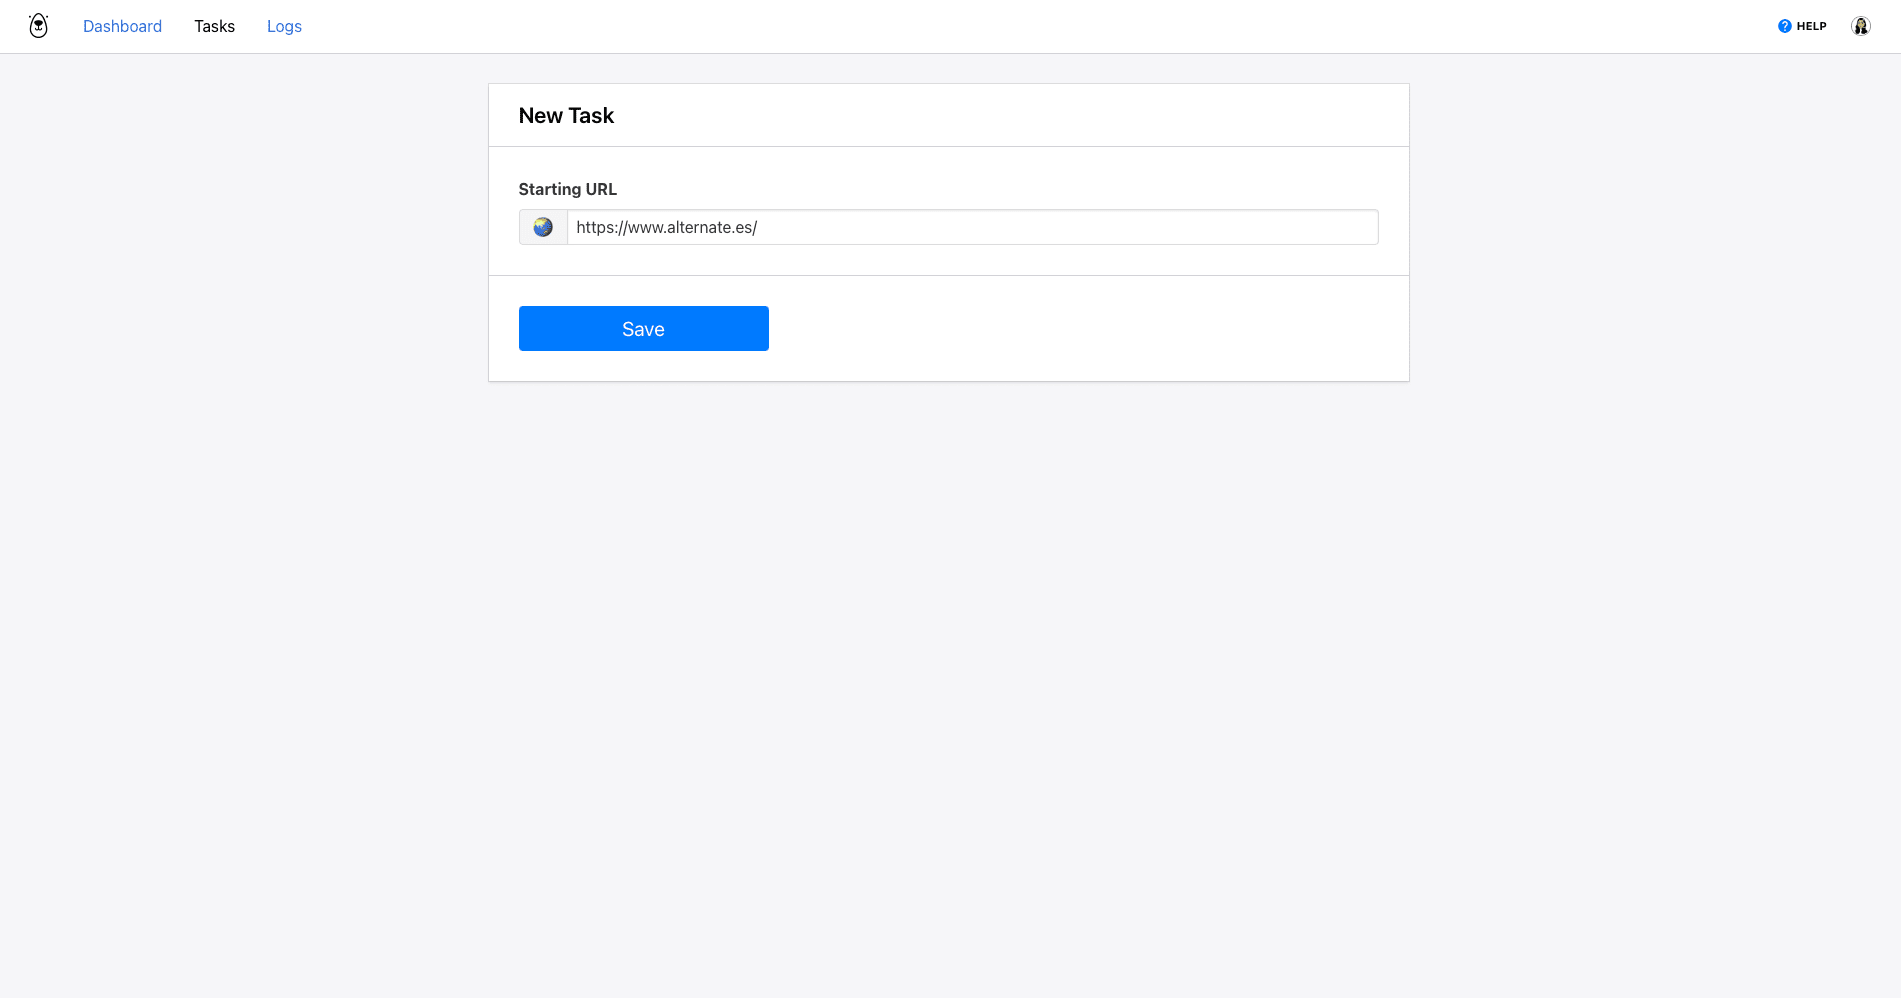 Screenshot of Browserbear app new task starting URL